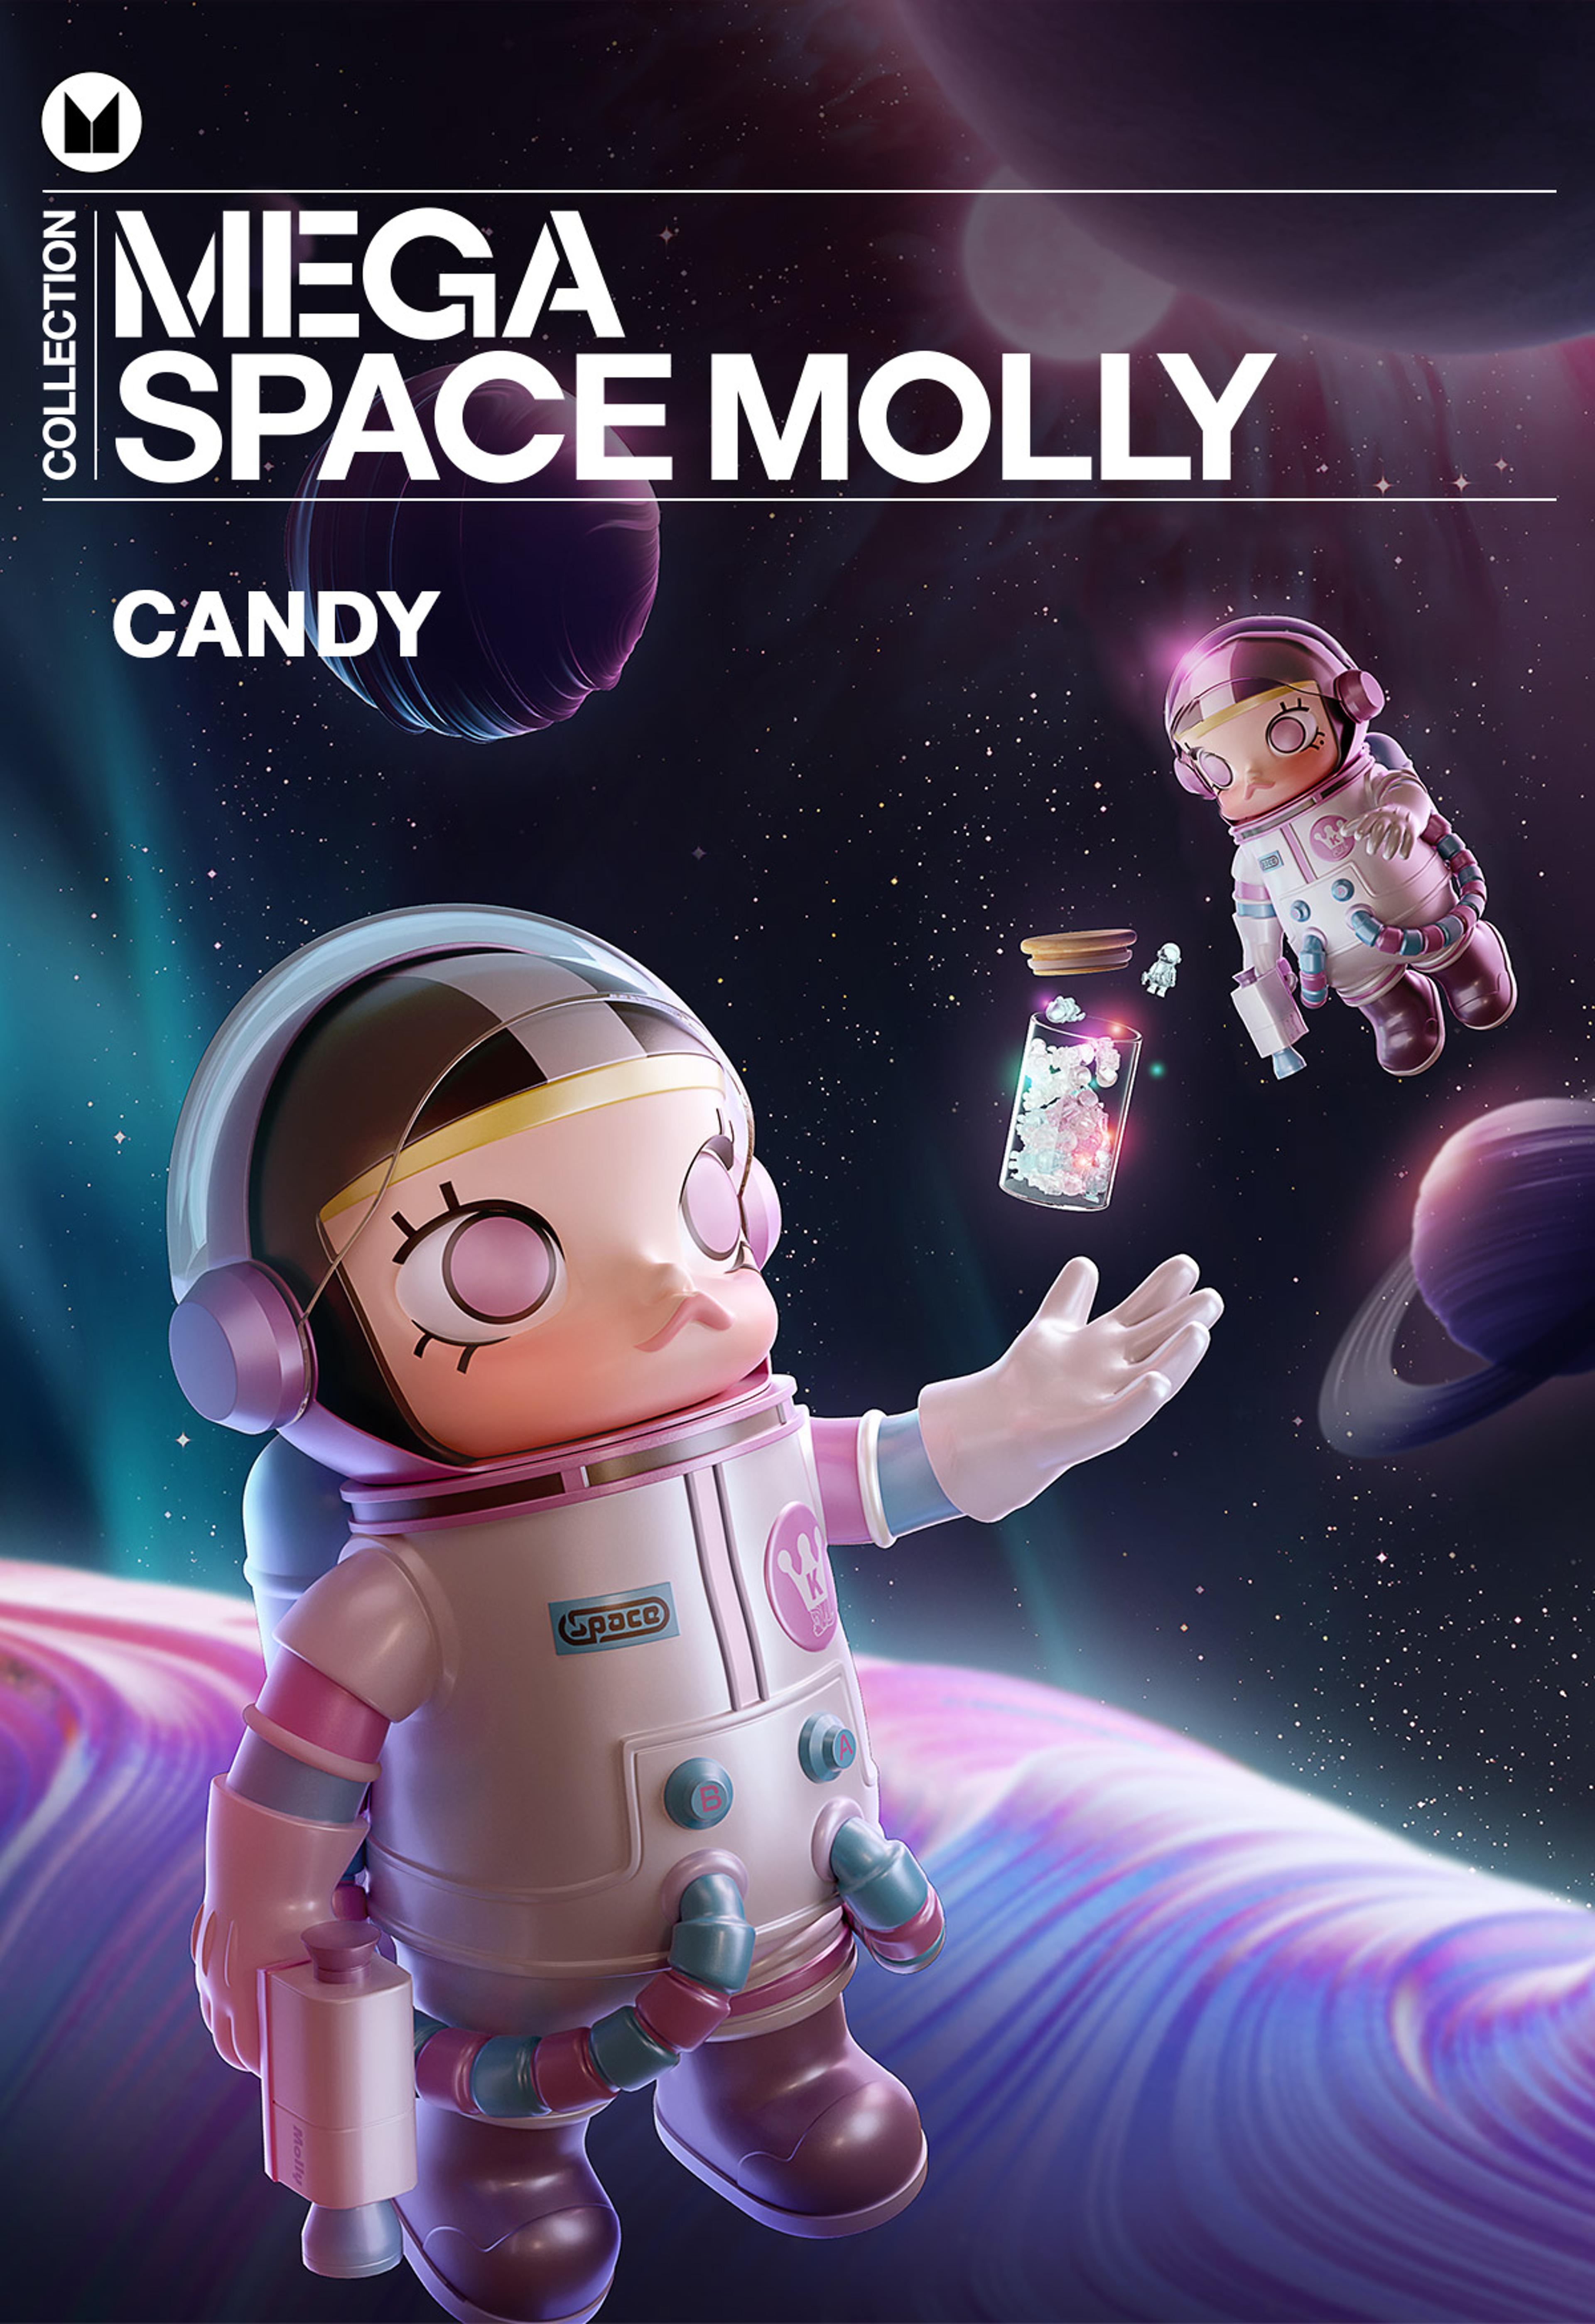 MEGA COLLECTION 1000% SPACE MOLLY Candy